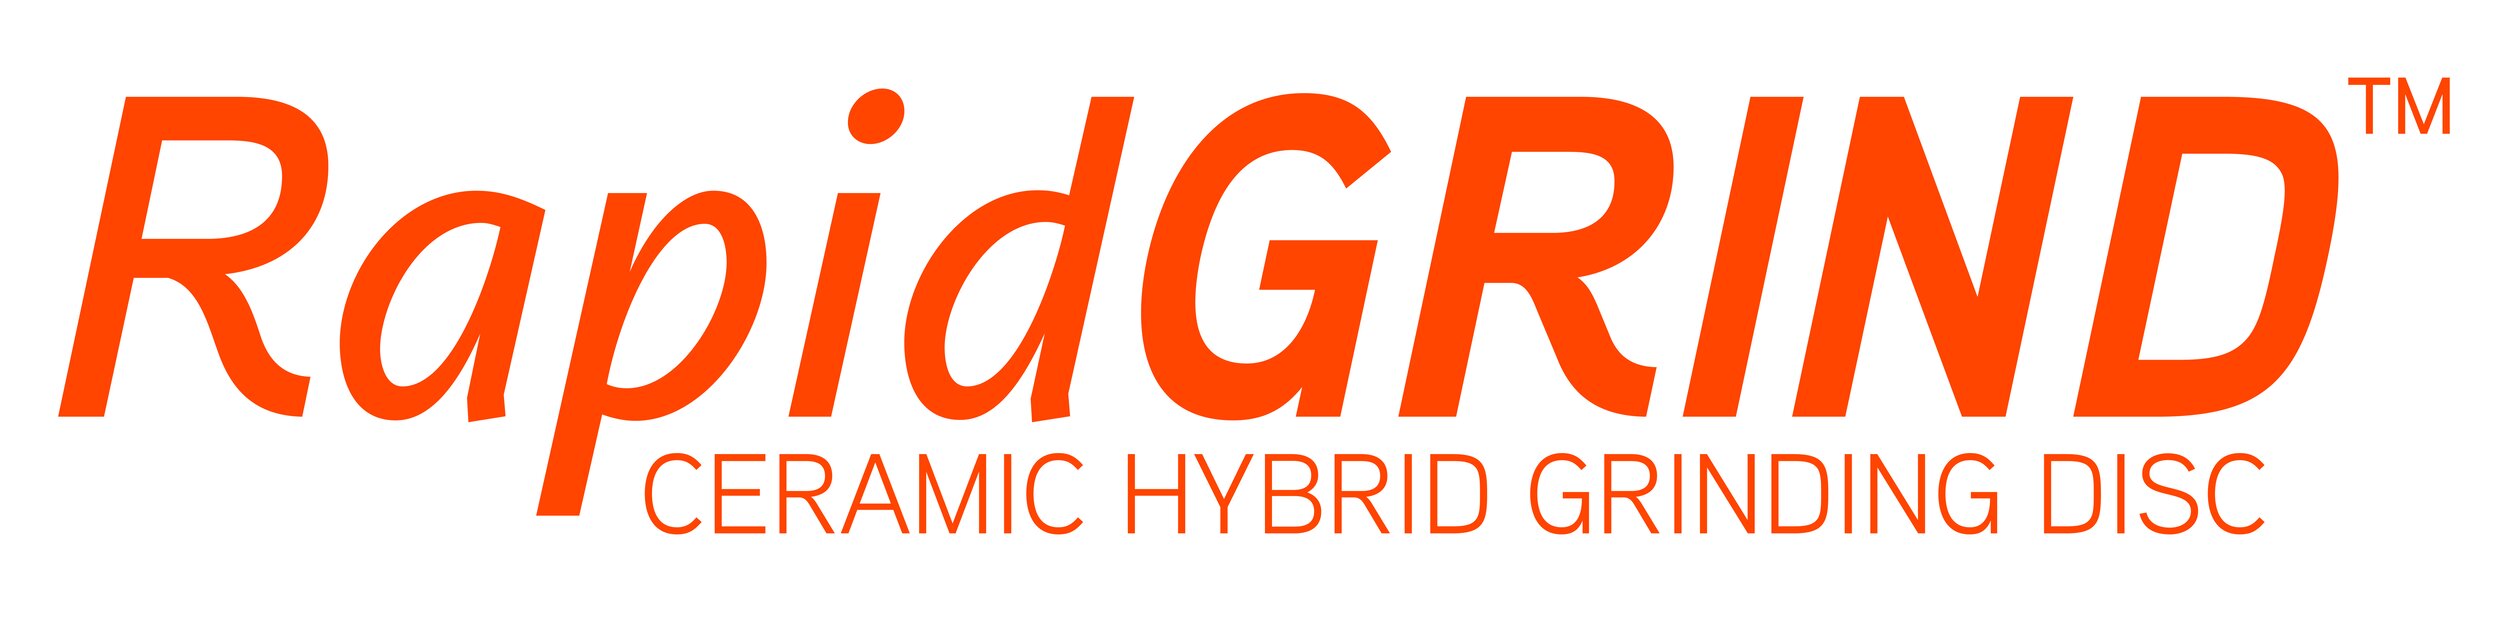 RapidGRIND_logo.jpg